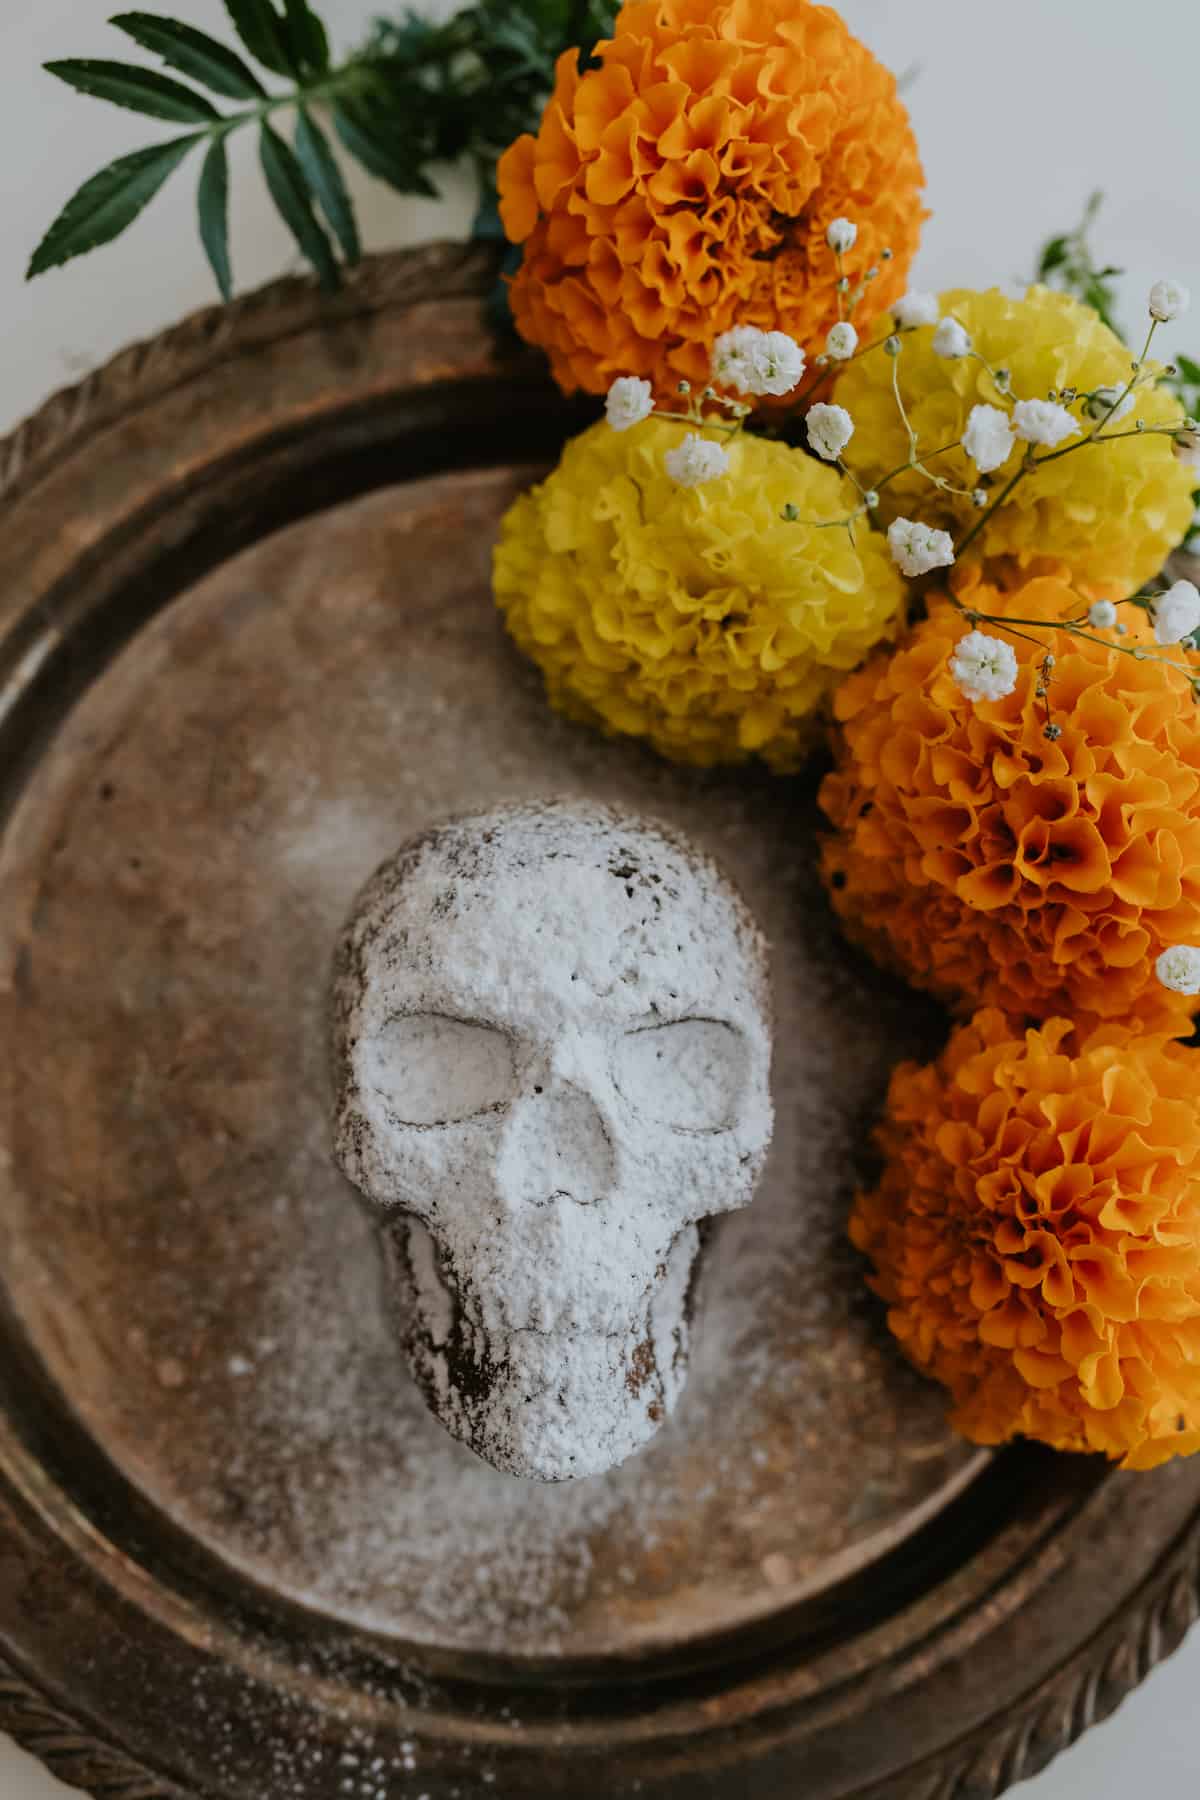 Decorates chocolate cake for Dia de los Muertos with powdered sugar and marigolds